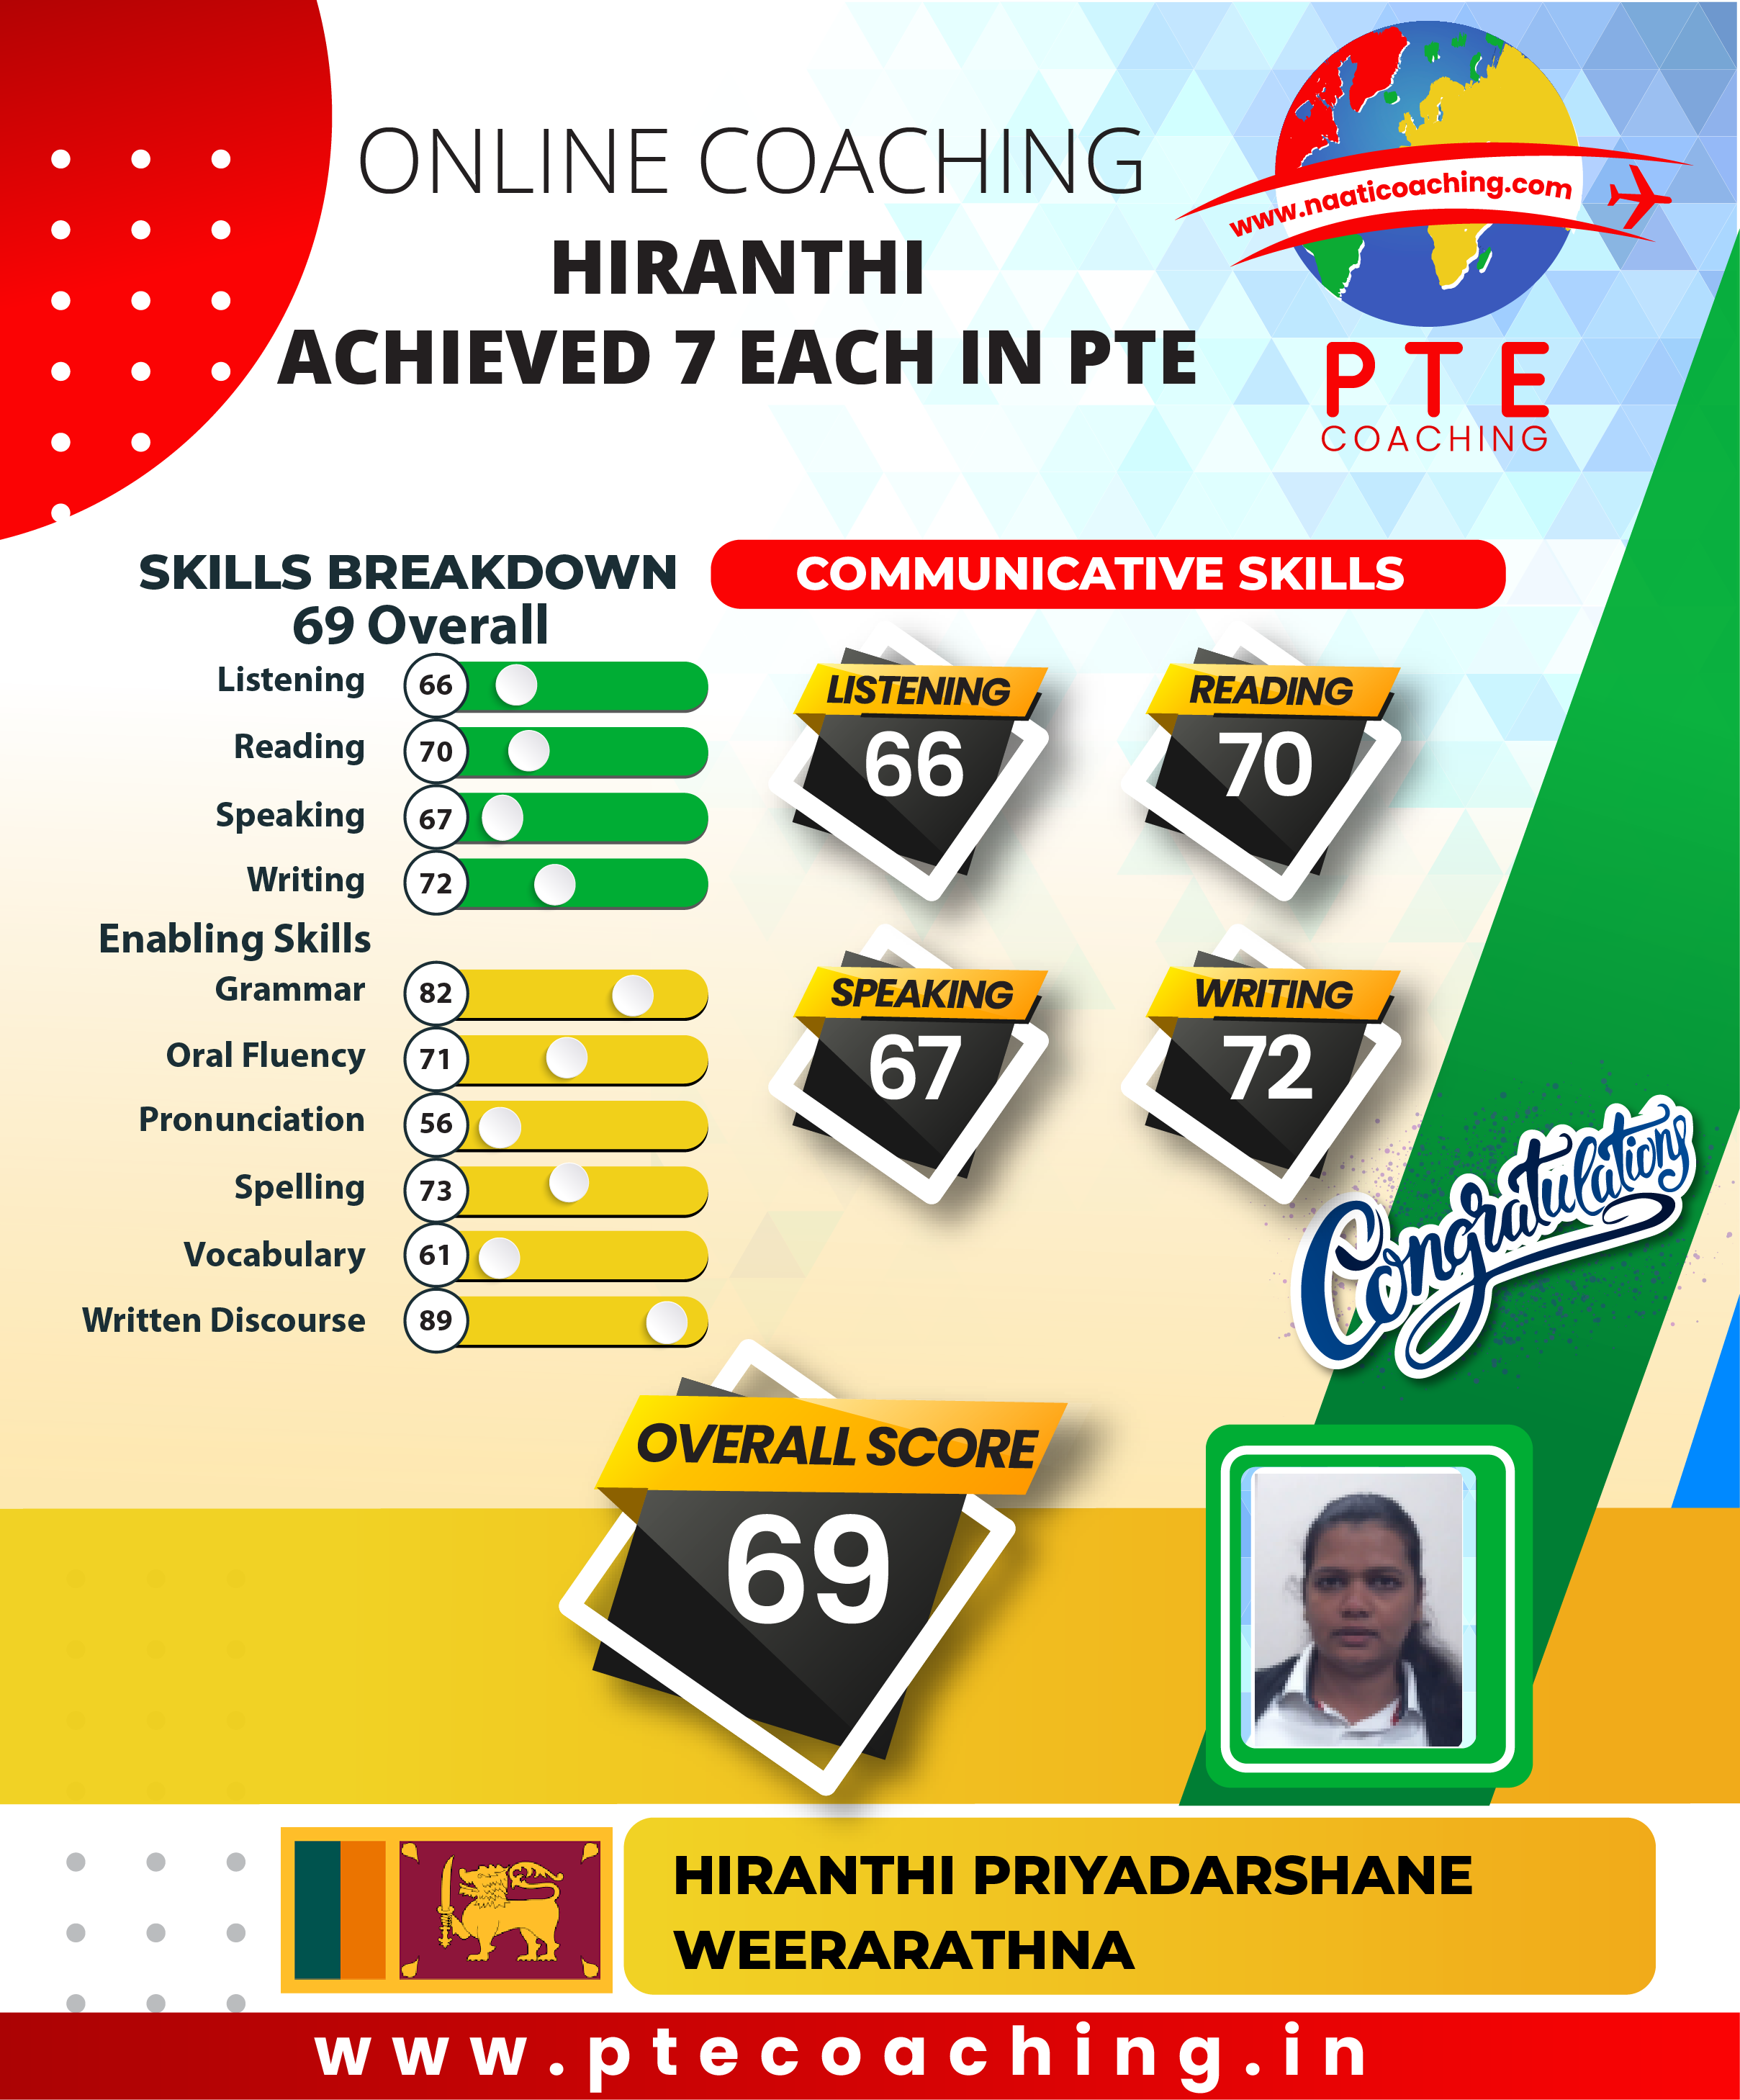 PTE Coaching Scorecard - Hiranthi achieved 7 each in PTE